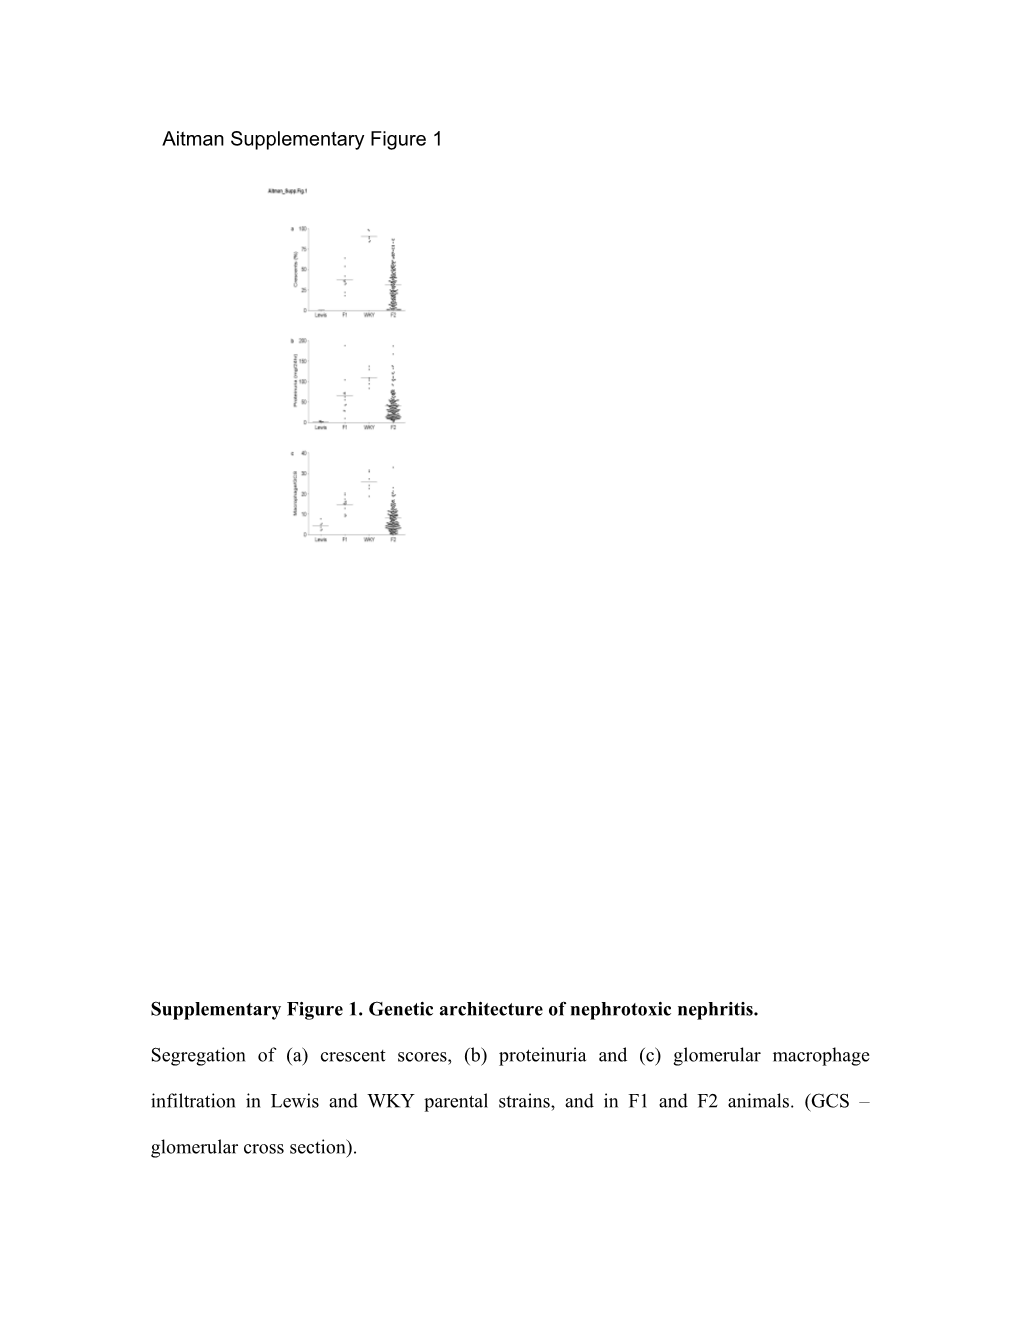 Supplementary Figure 1. Genetic Architecture of Nephrotoxic Nephritis